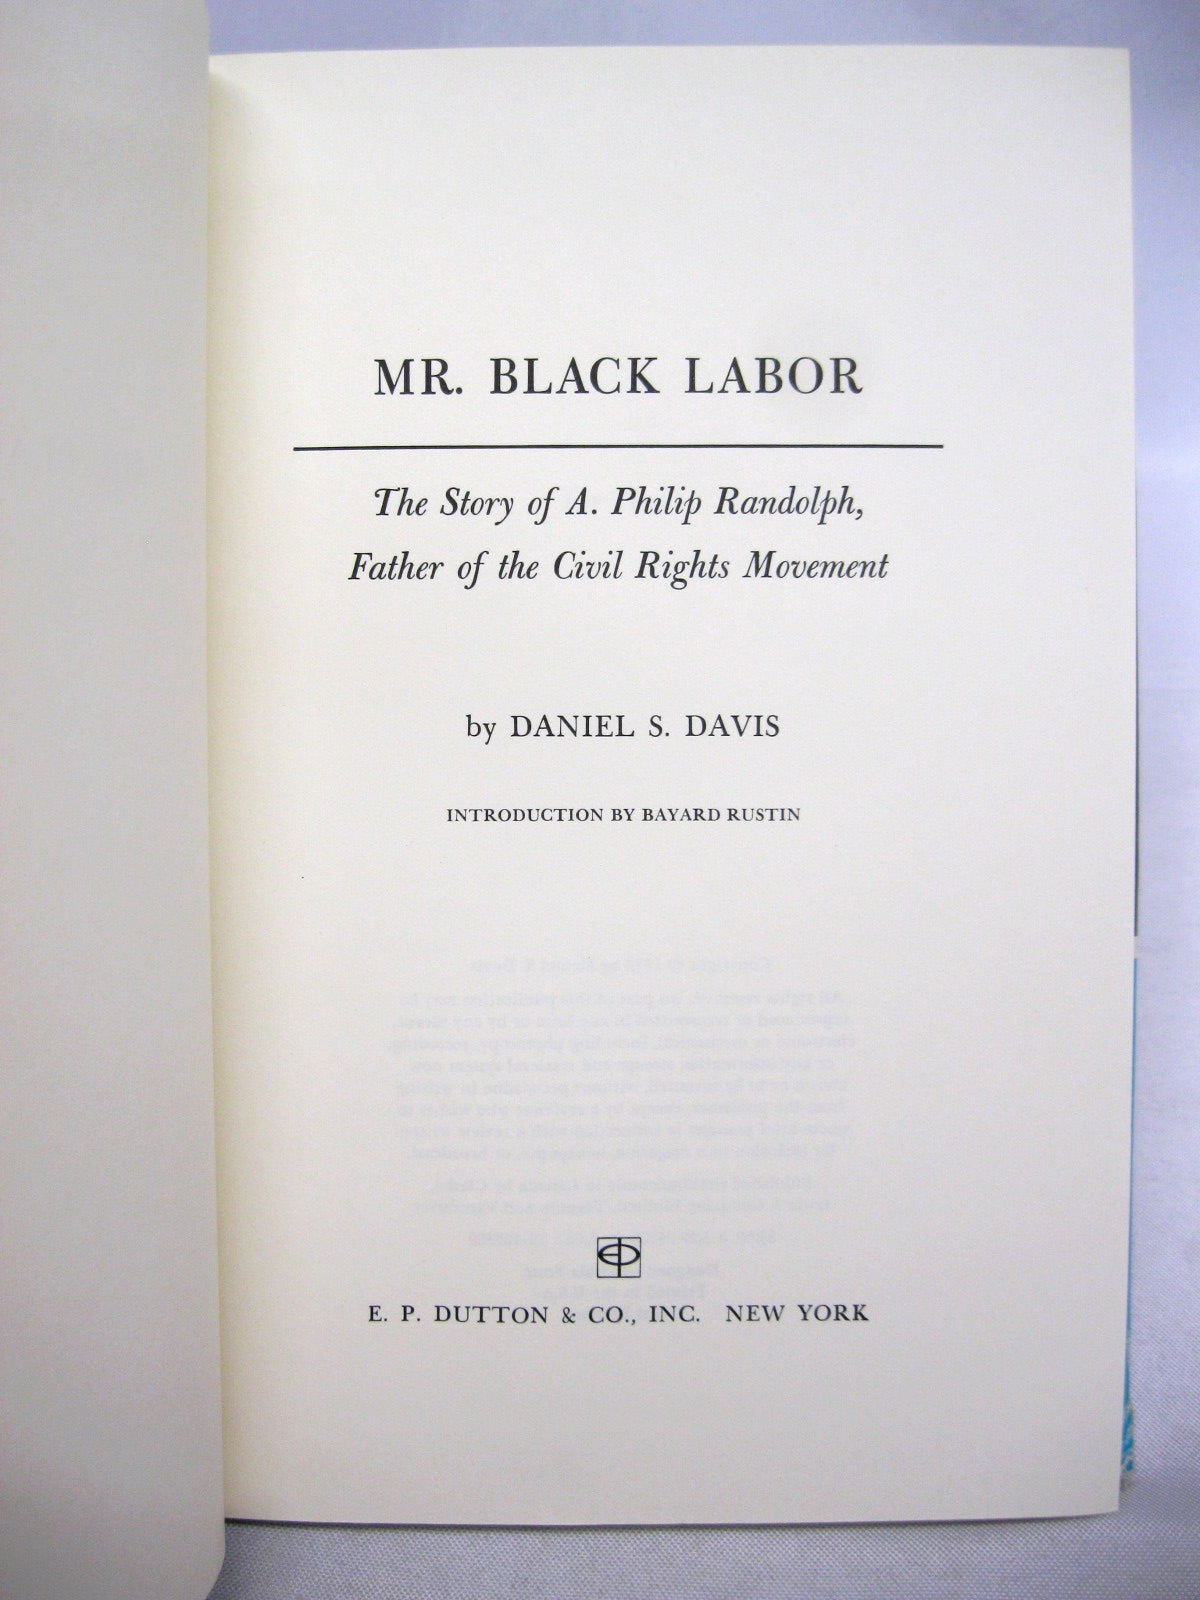 Mr Black Labor by Daniel S Davis